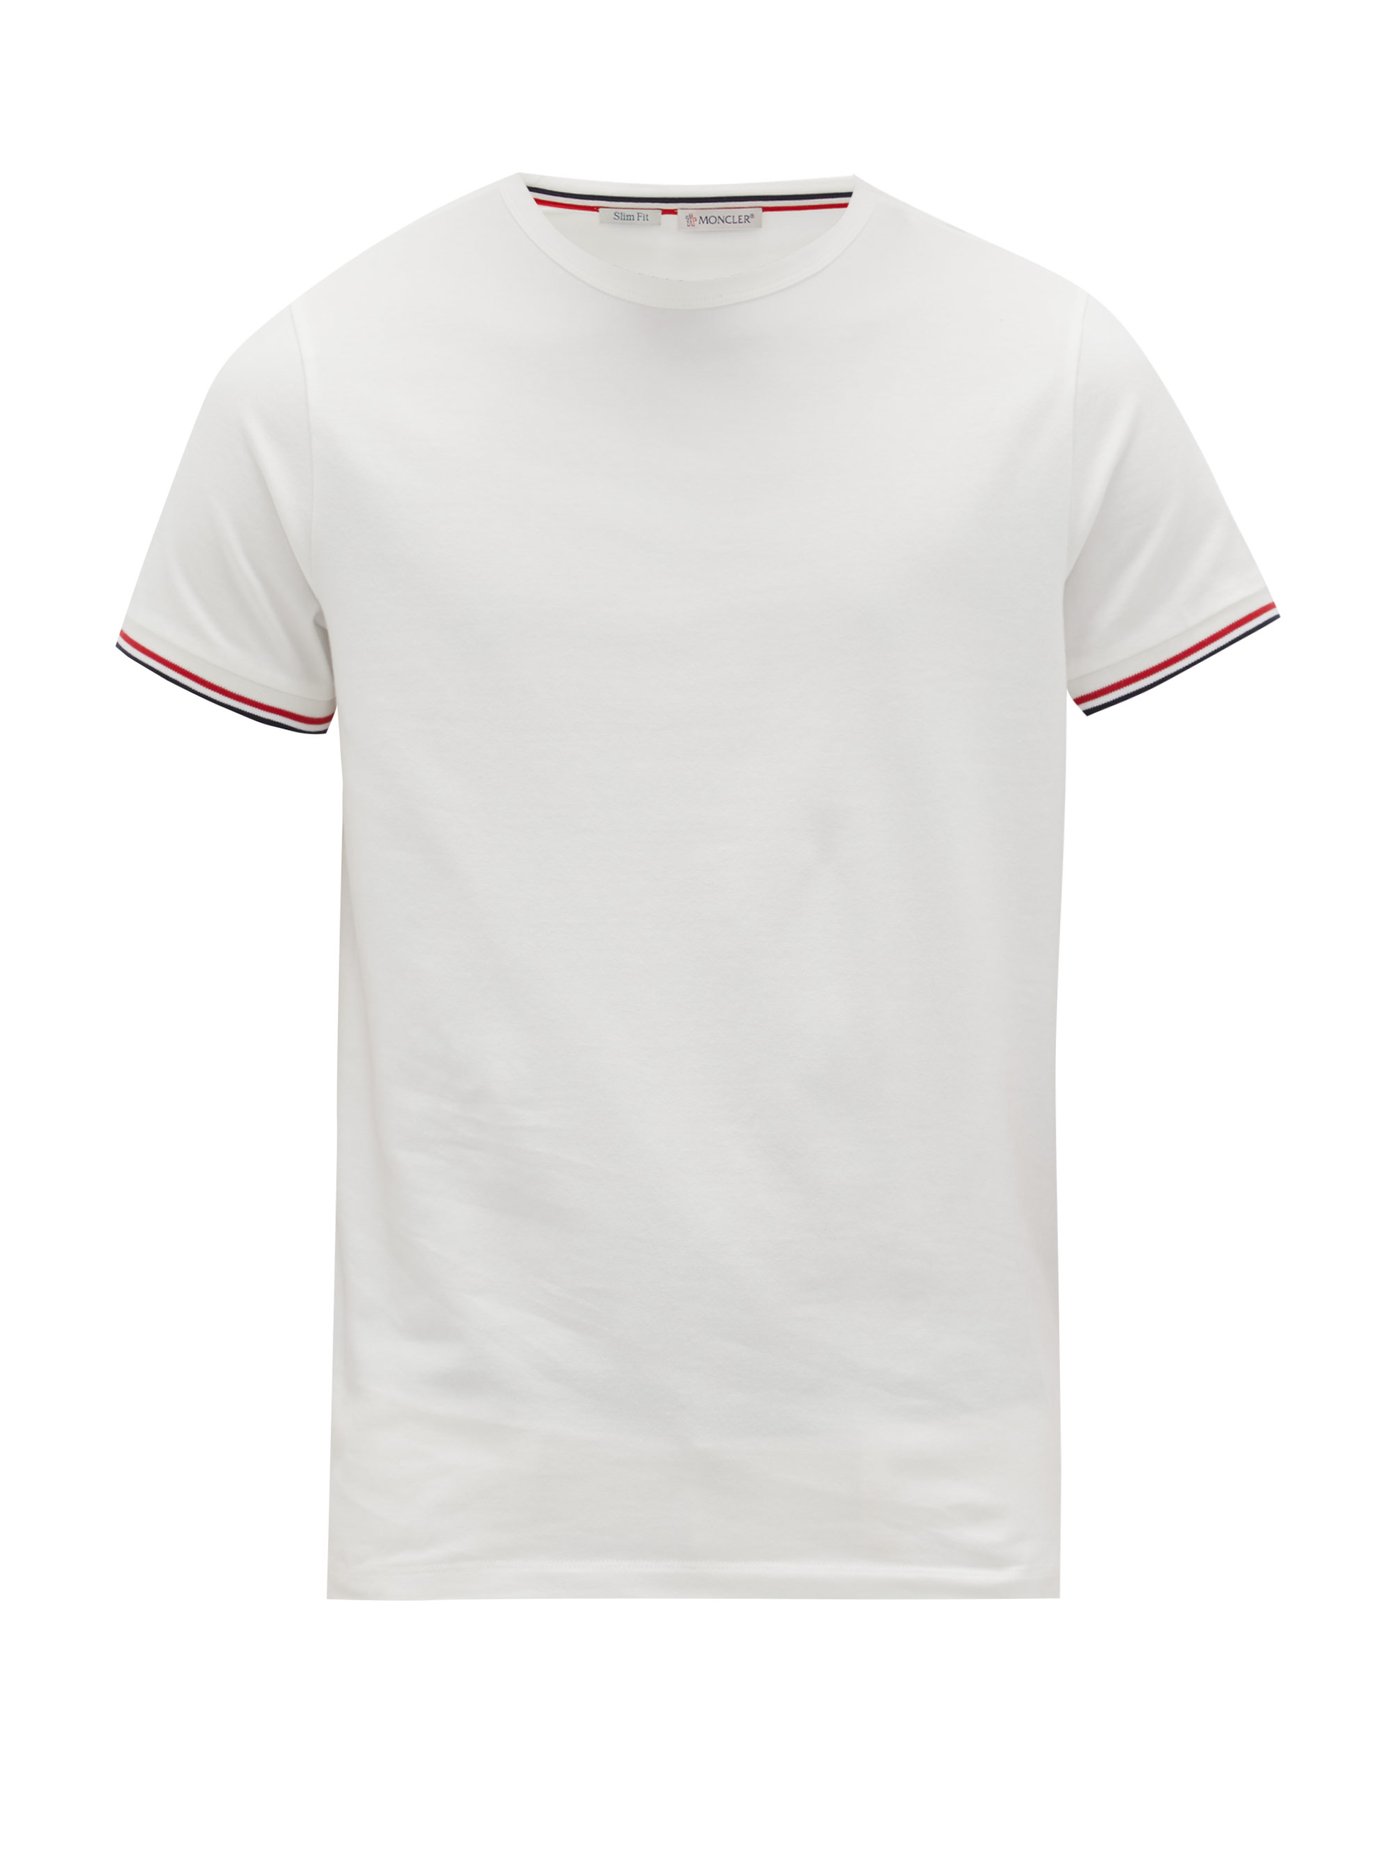 moncler white t shirt